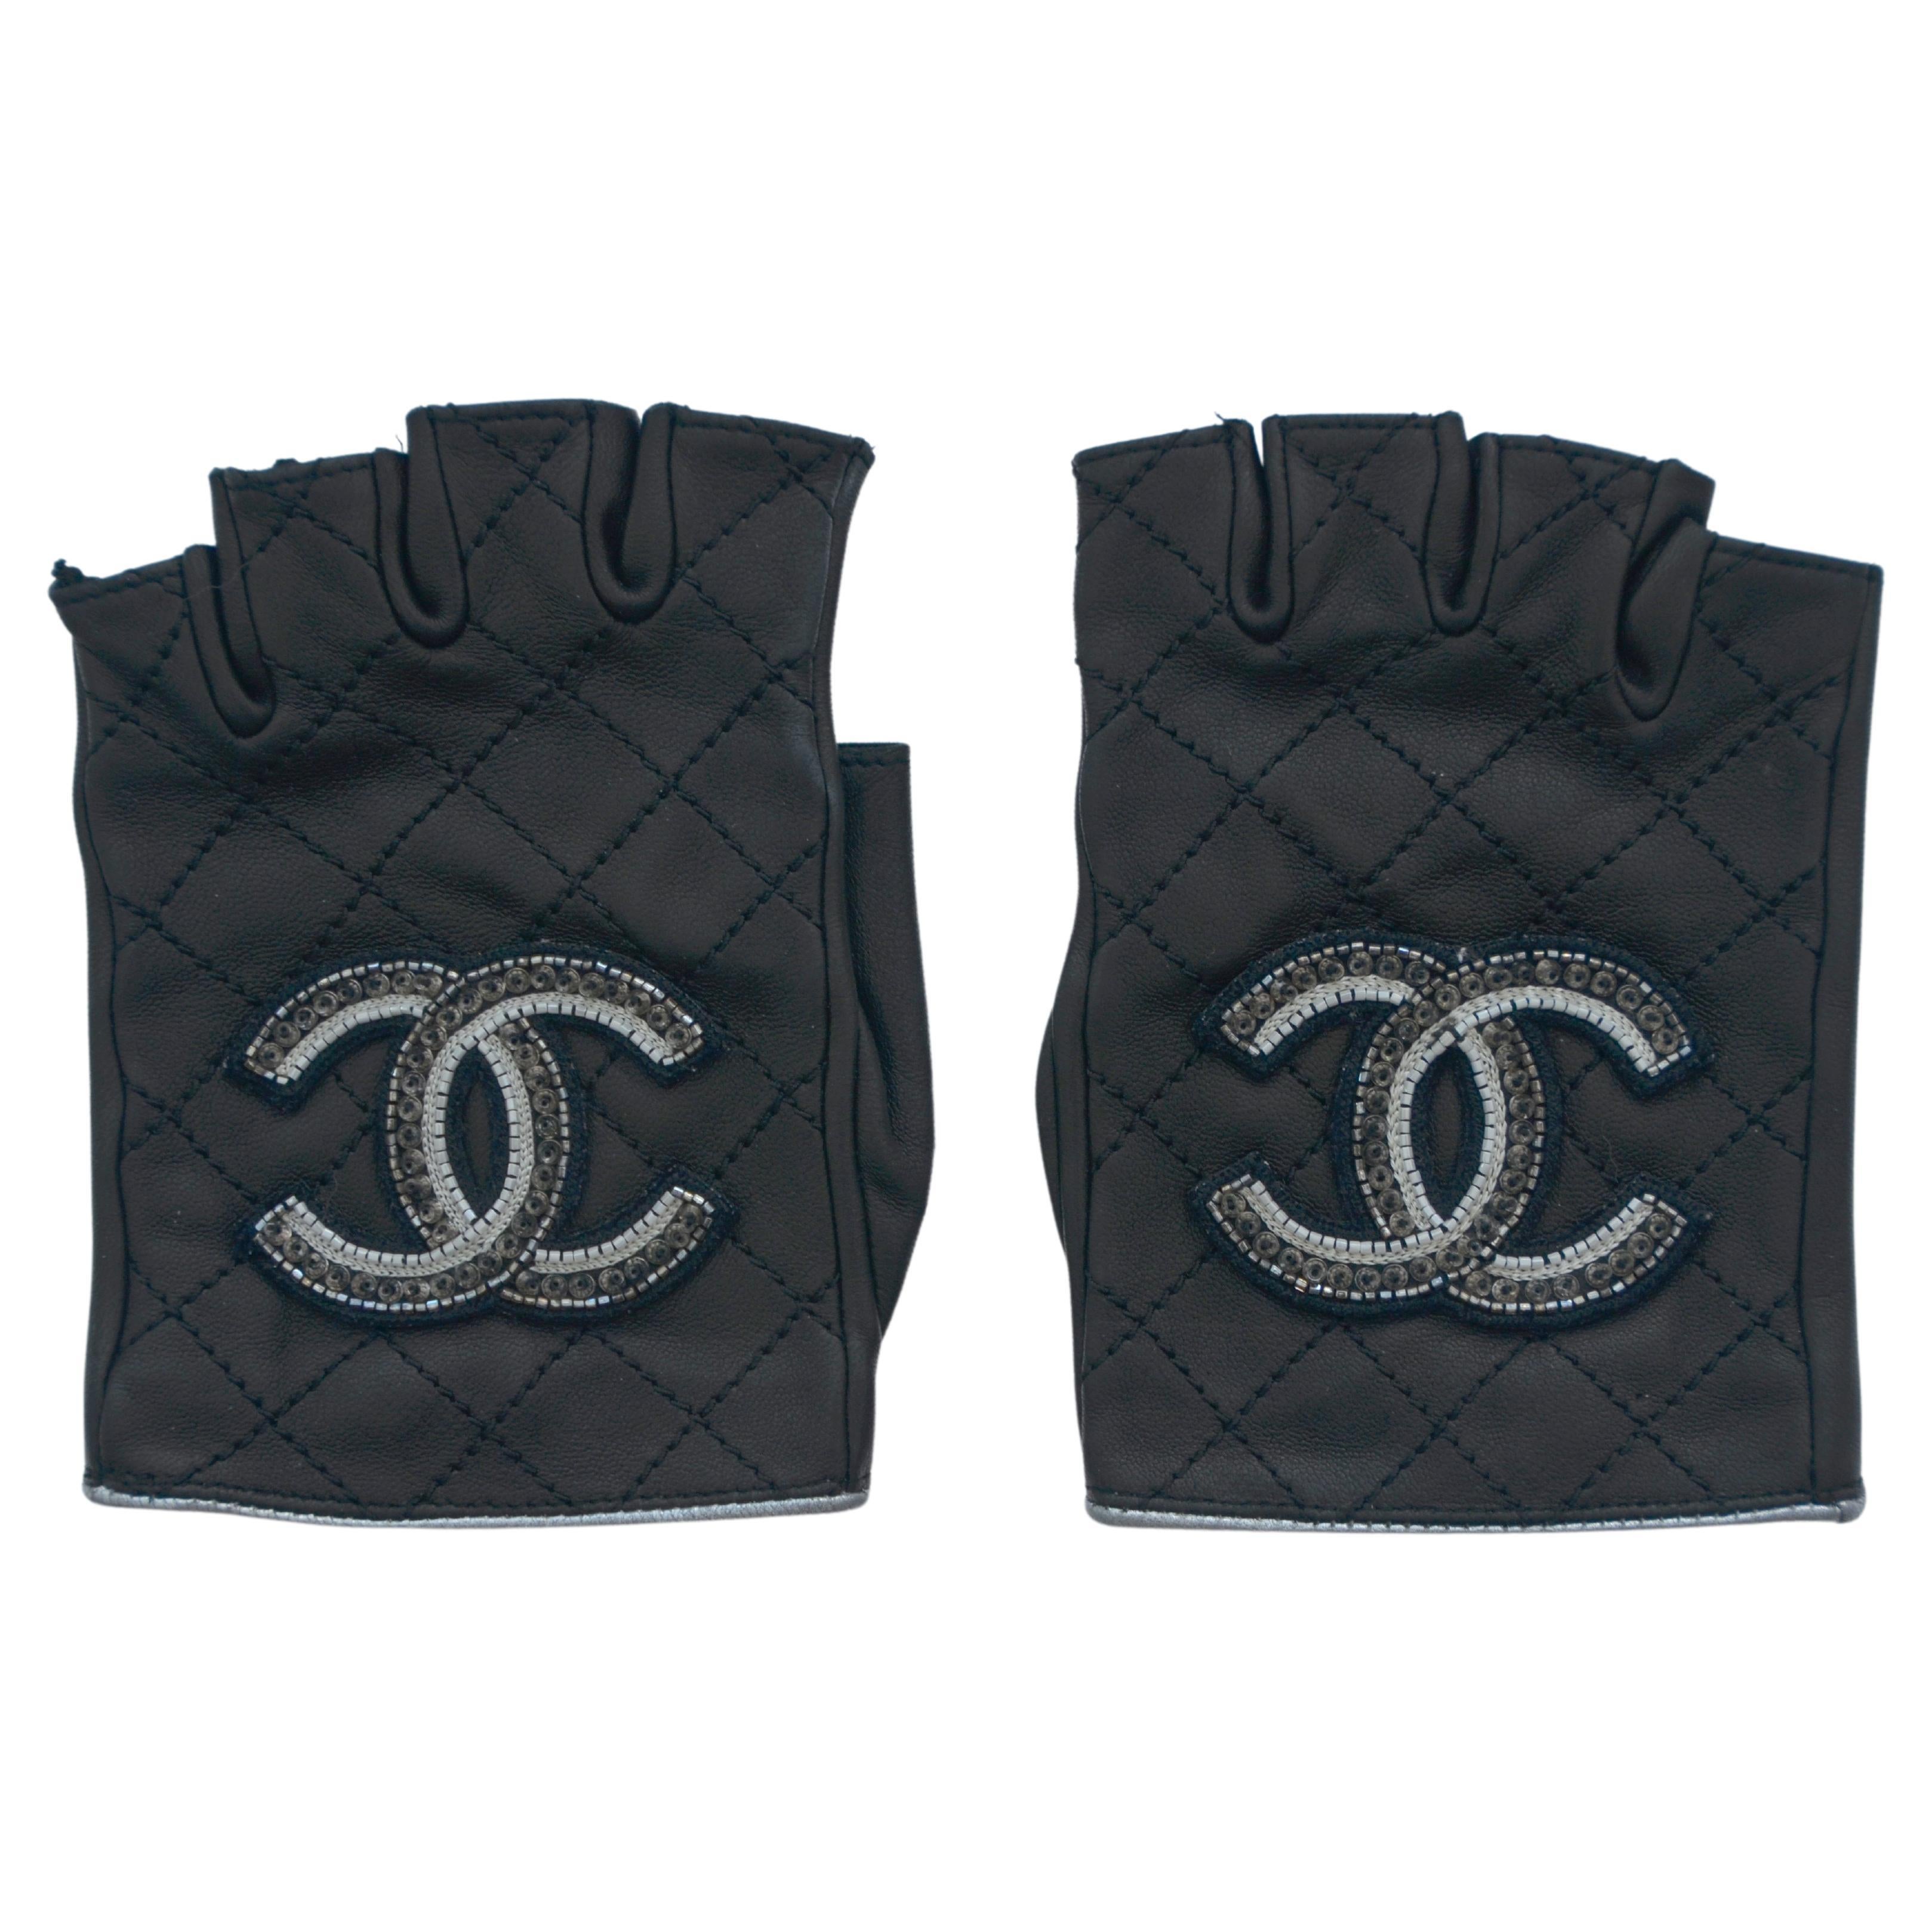 Chanel Embellished Gloves As Seen On Madonna SZ 7.5